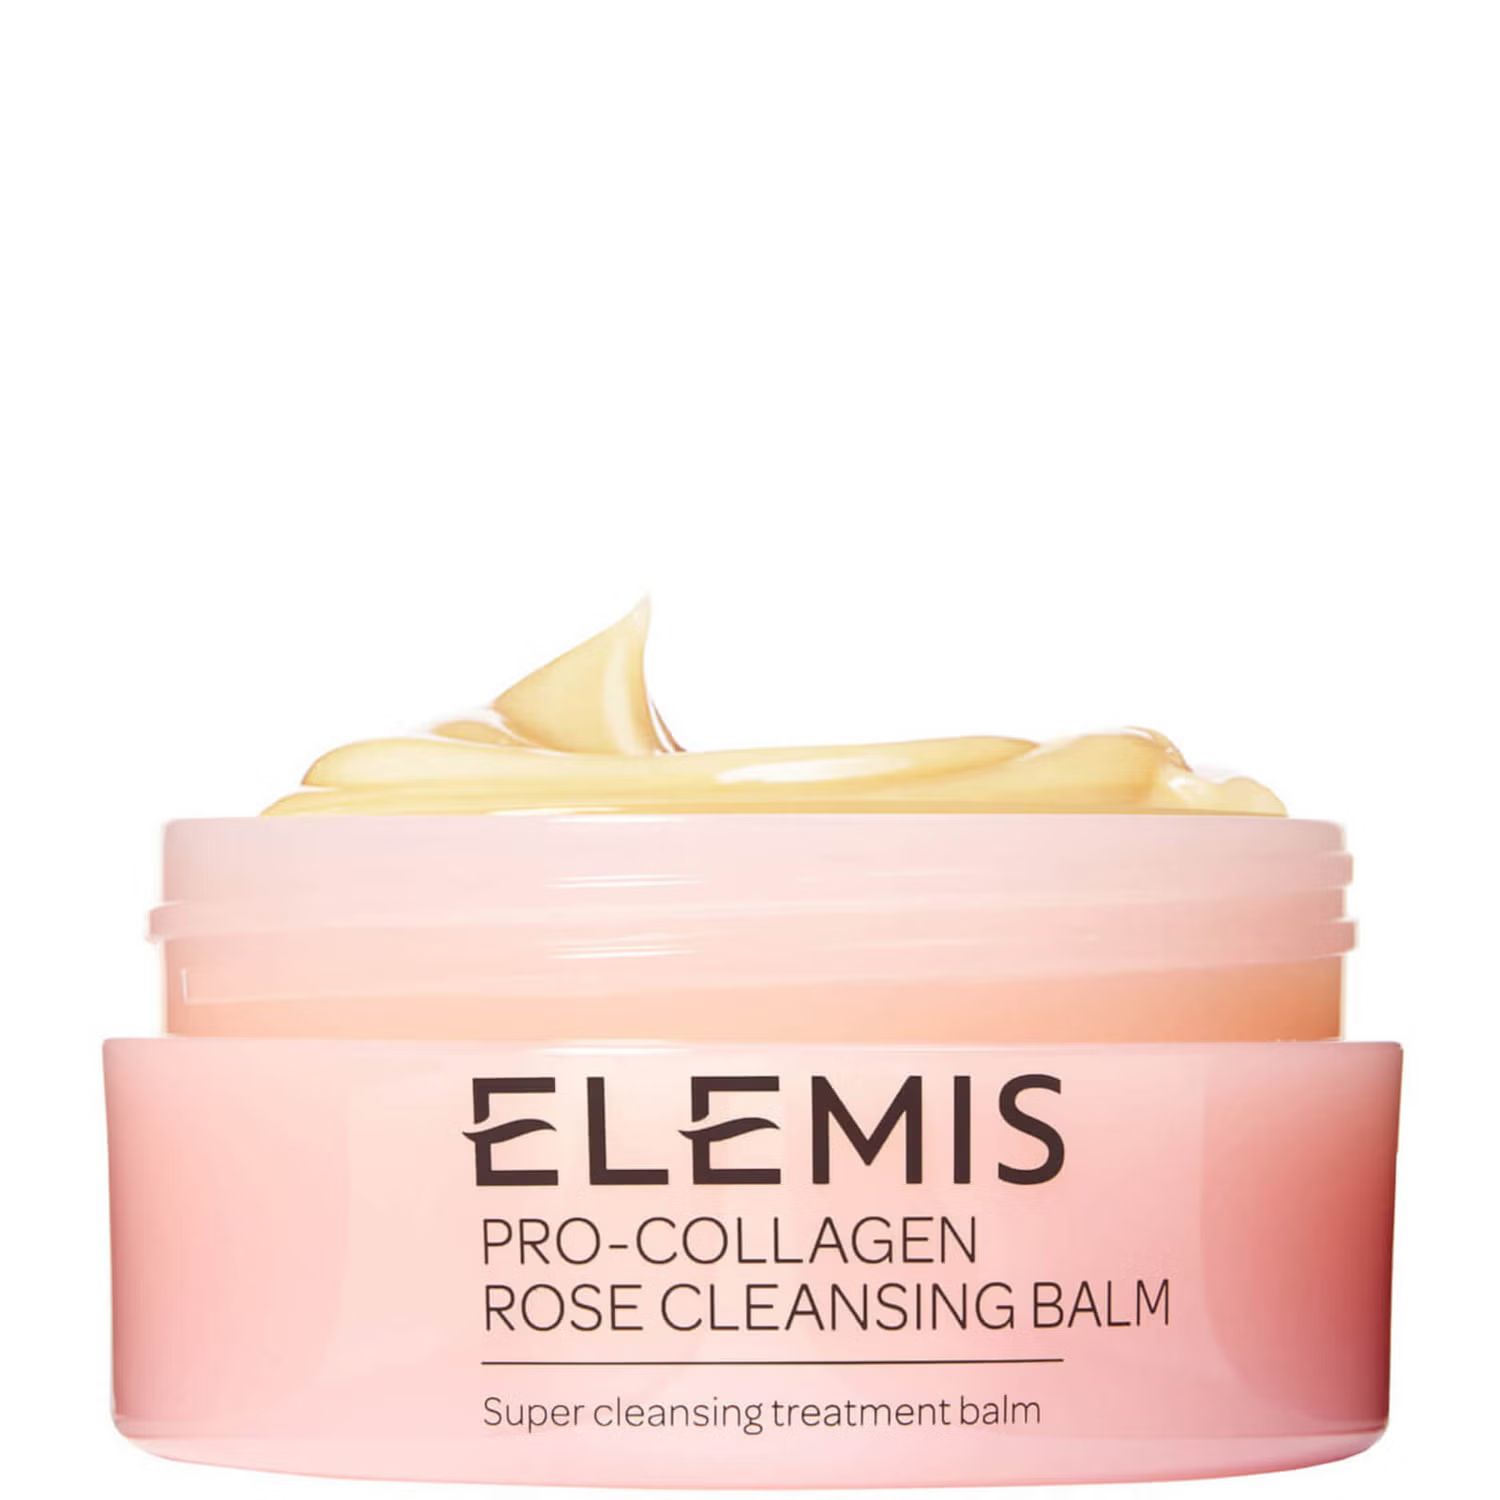 ELEMIS Pro-Collagen Rose Cleansing Balm 100g | Look Fantastic (UK)